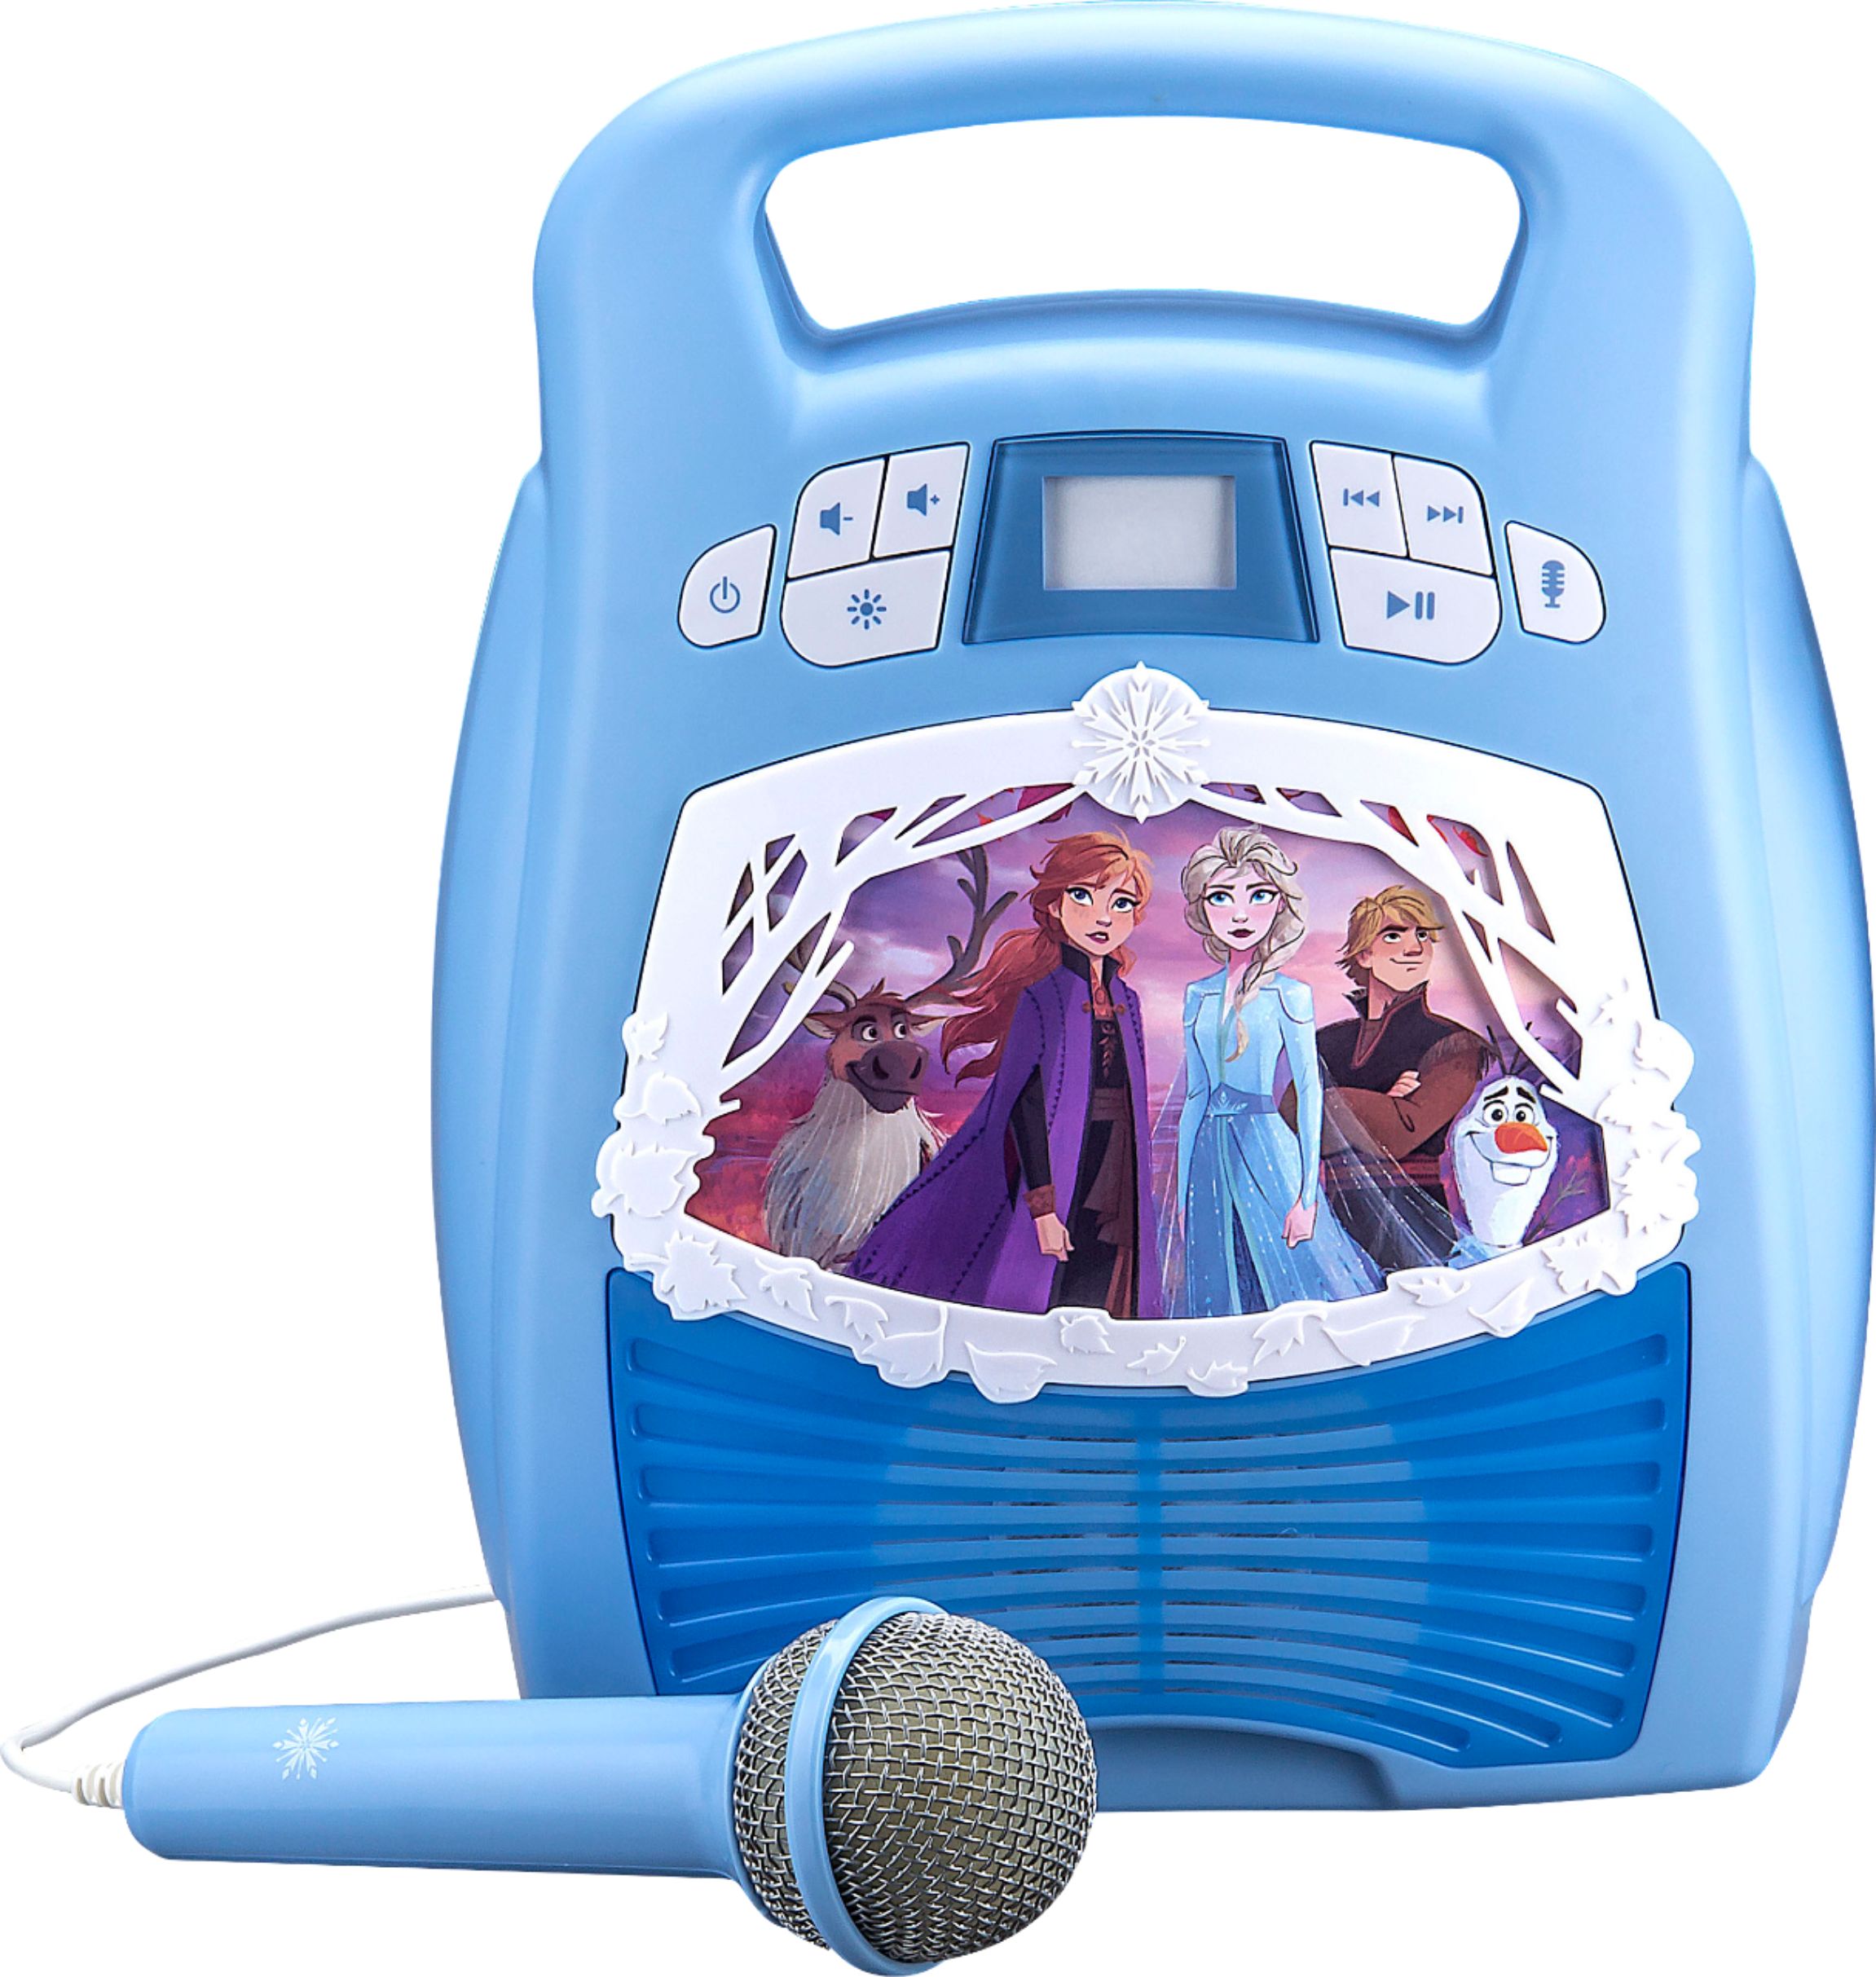 ETbotu Kids Microphone Music Player Built in Speaker Children Karaoke Toys Blue 